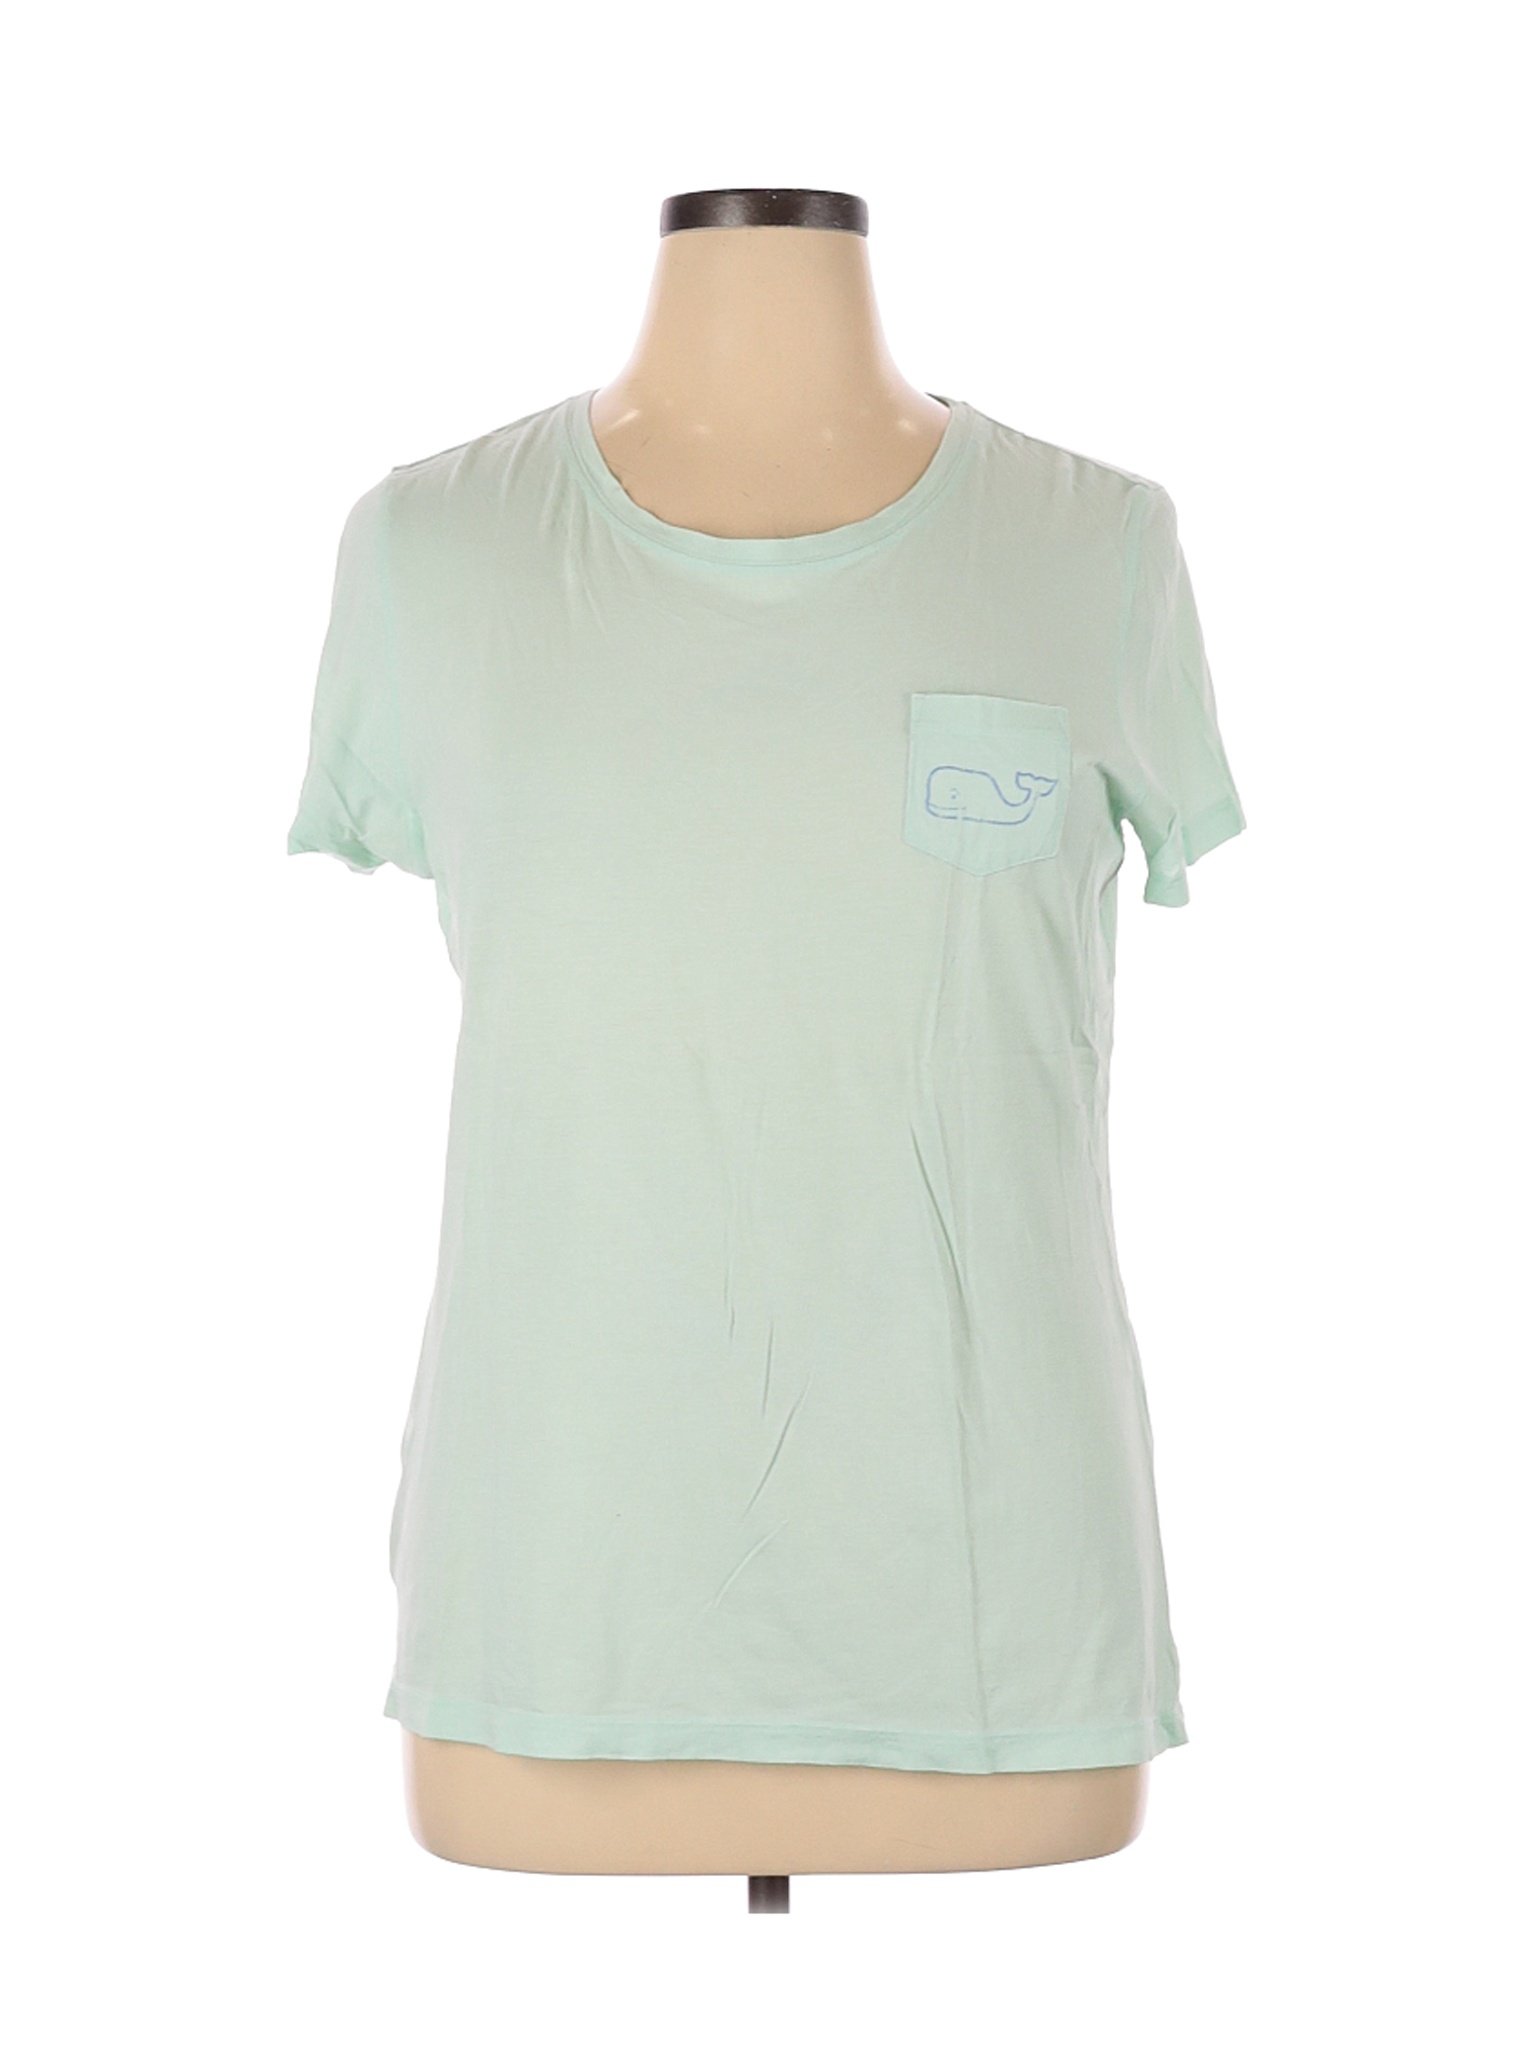 Vineyard Vines Women Green Short Sleeve T-Shirt XL | eBay